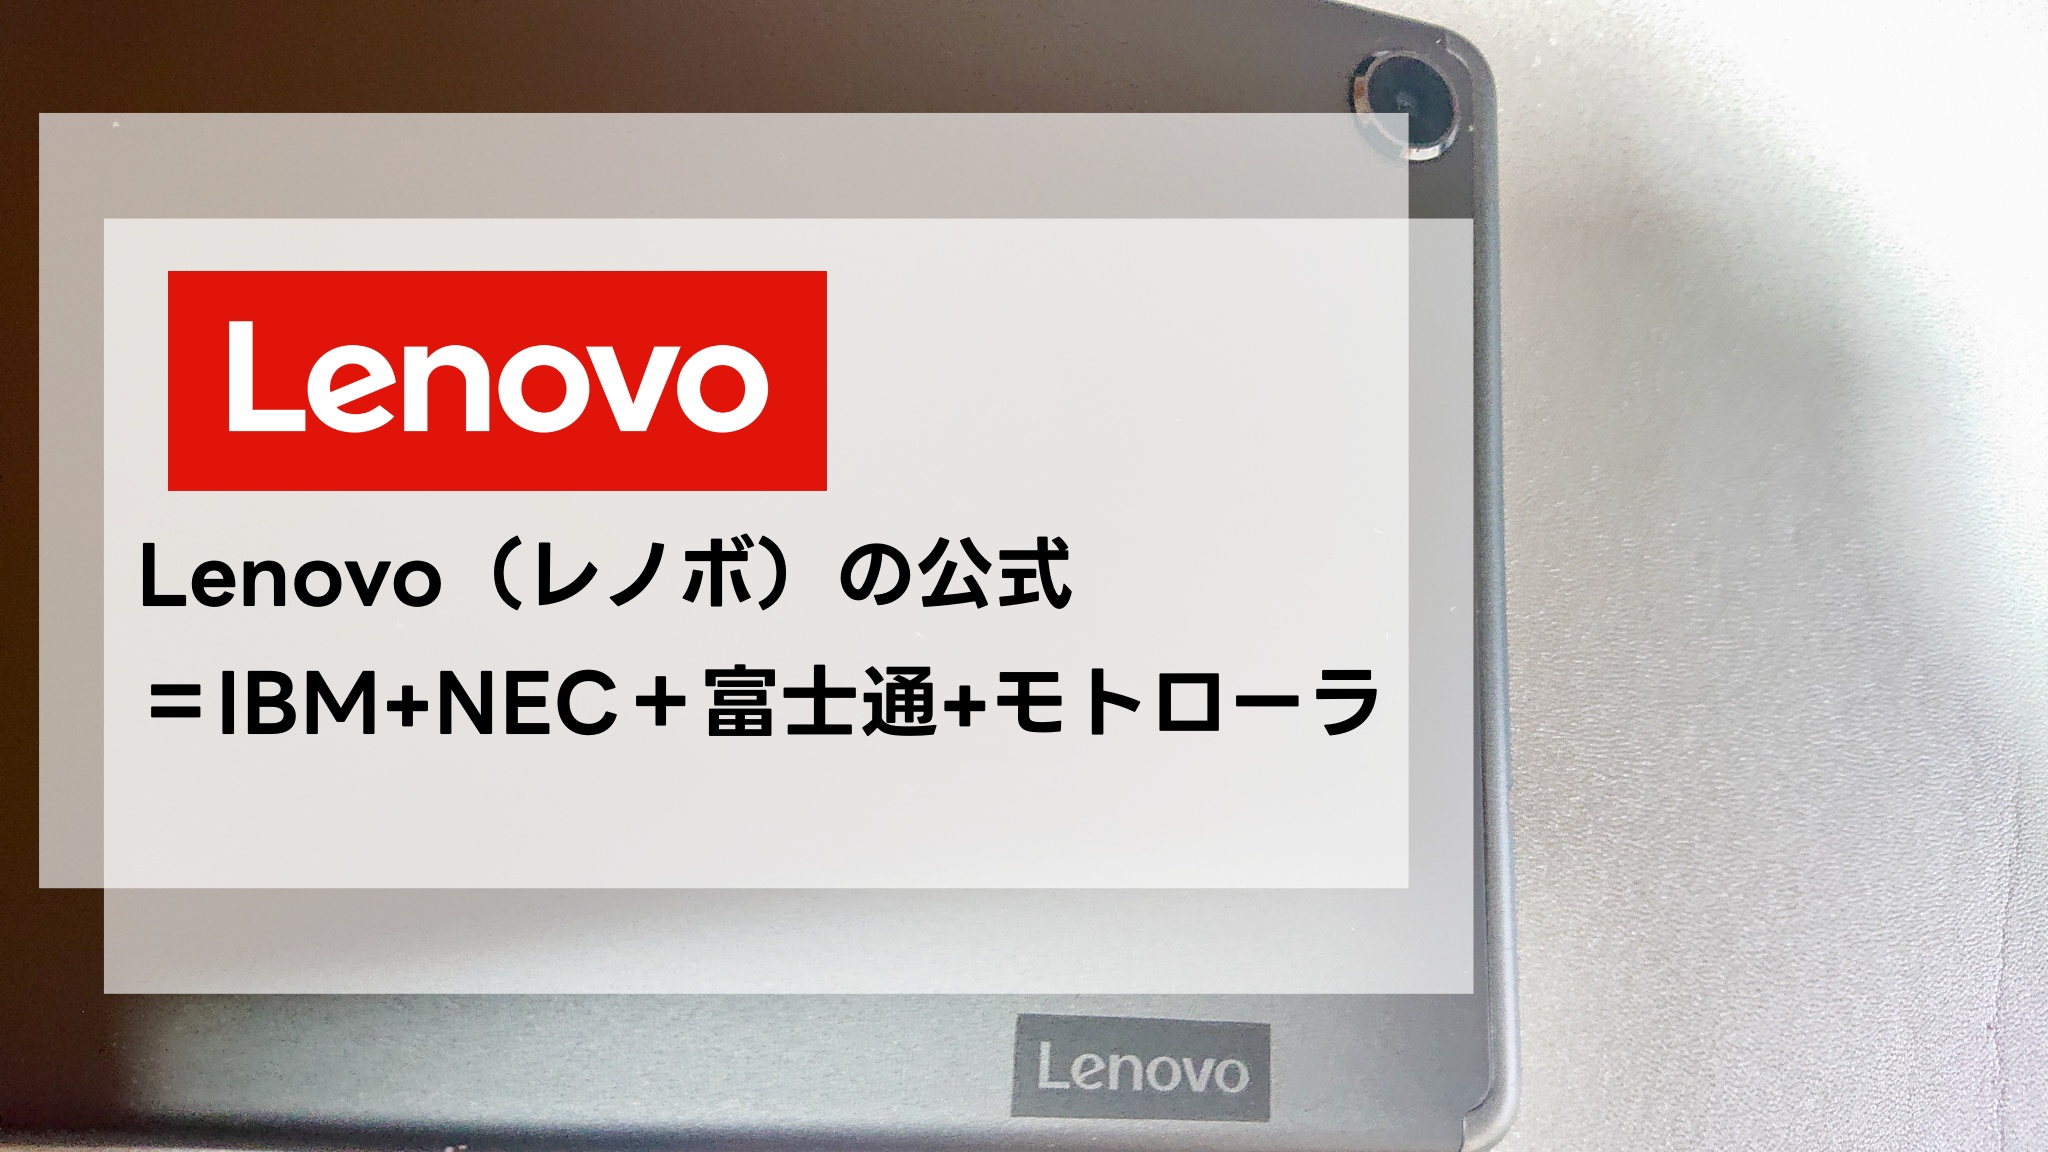 Lenovo（レノボ）の公式＝IBM+NEC＋富士通+モトローラ